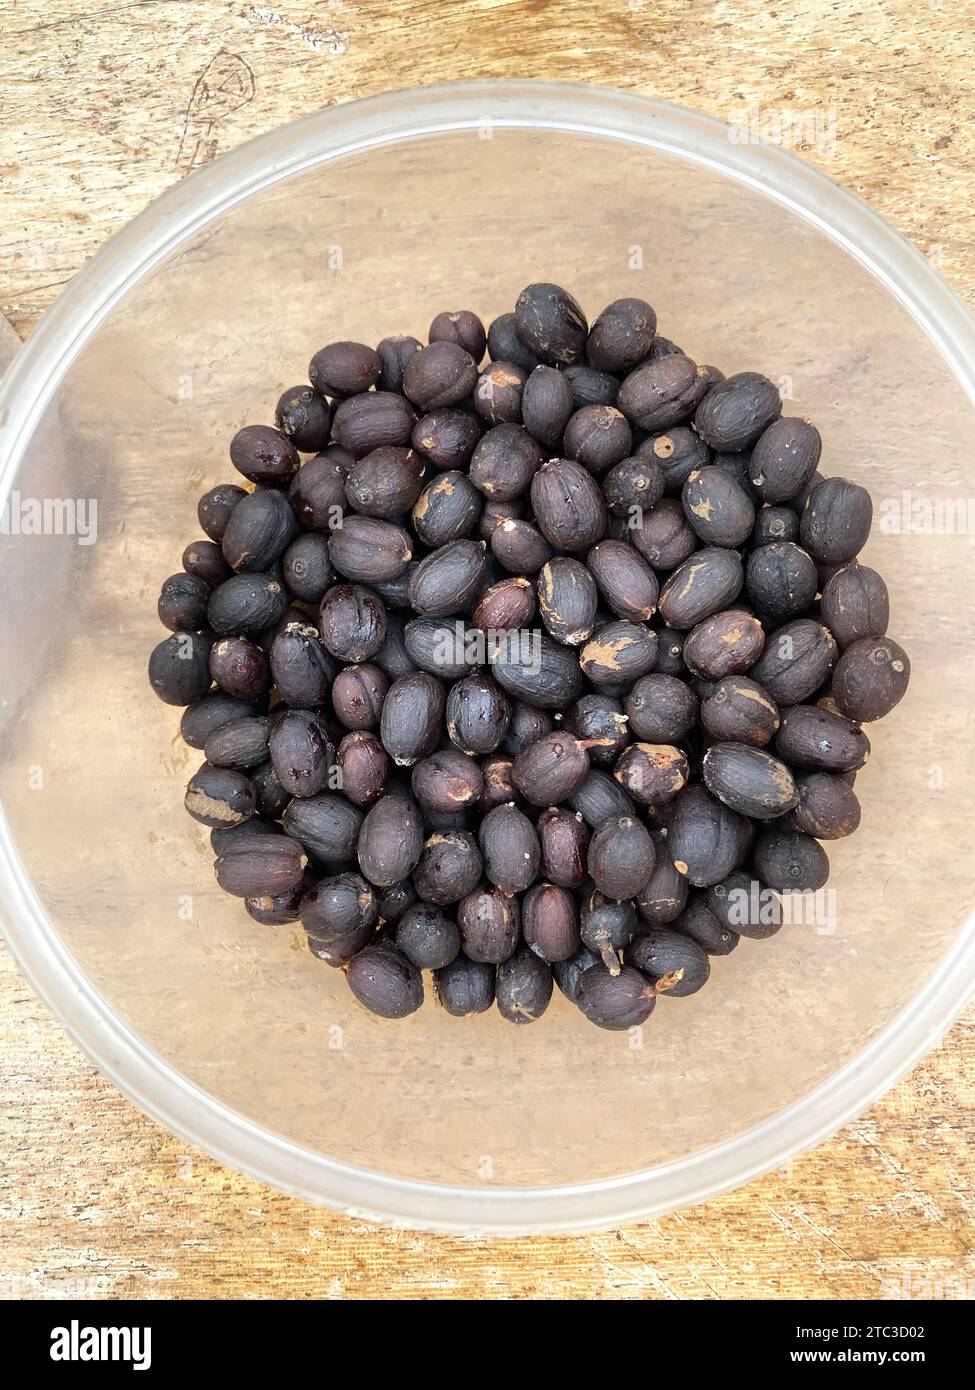 Bowl or Dried Arabica Coffee Berries Stock Photo